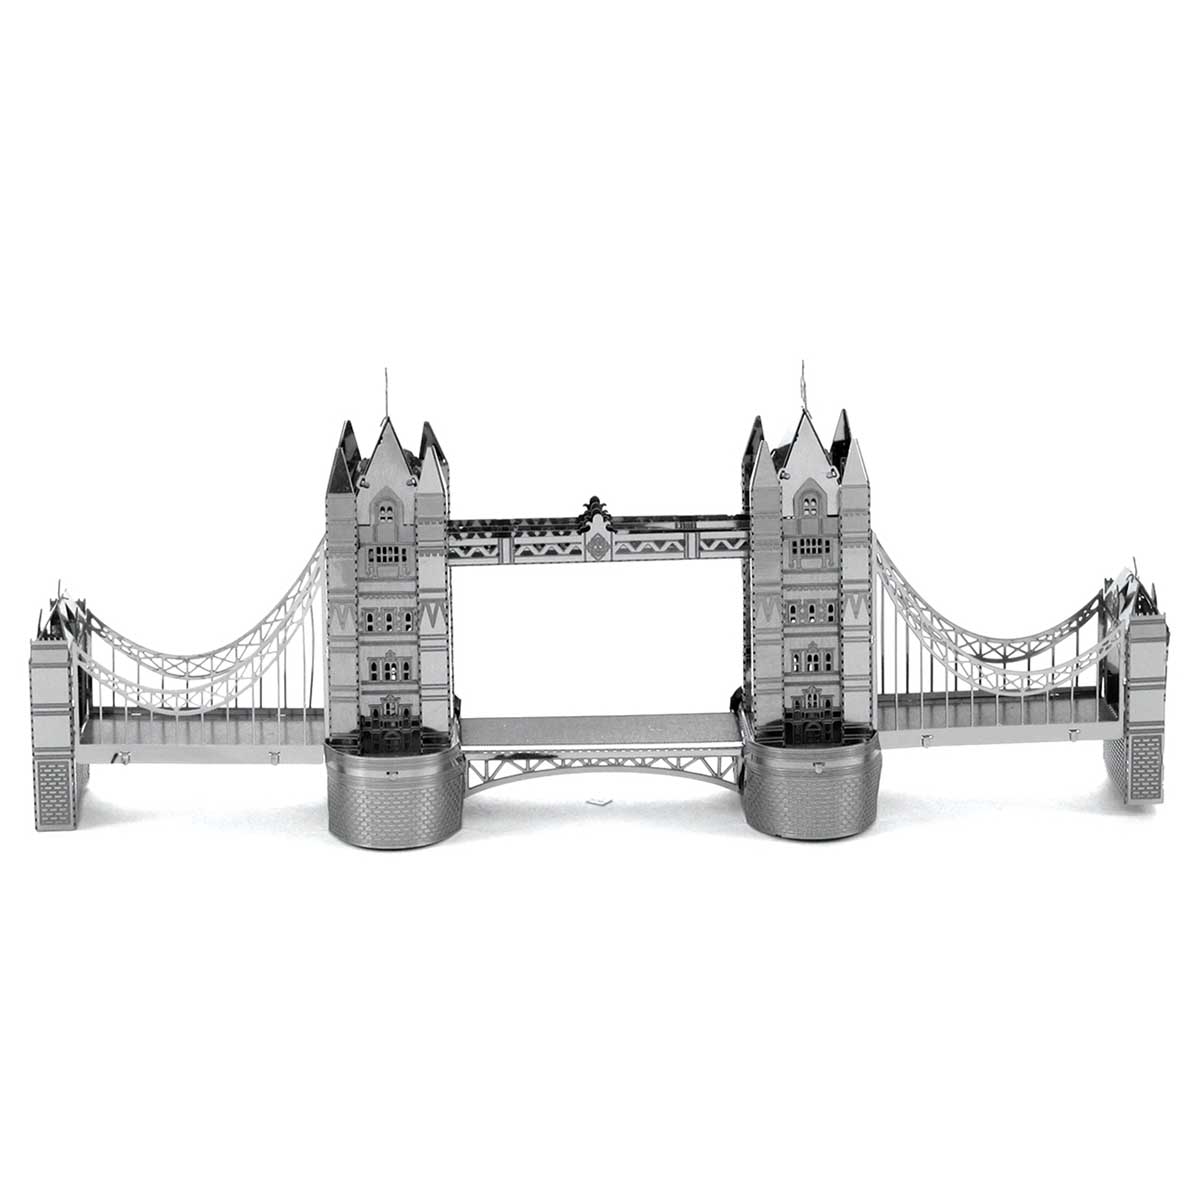 London Tower Bridge London & United Kingdom Metal Puzzles